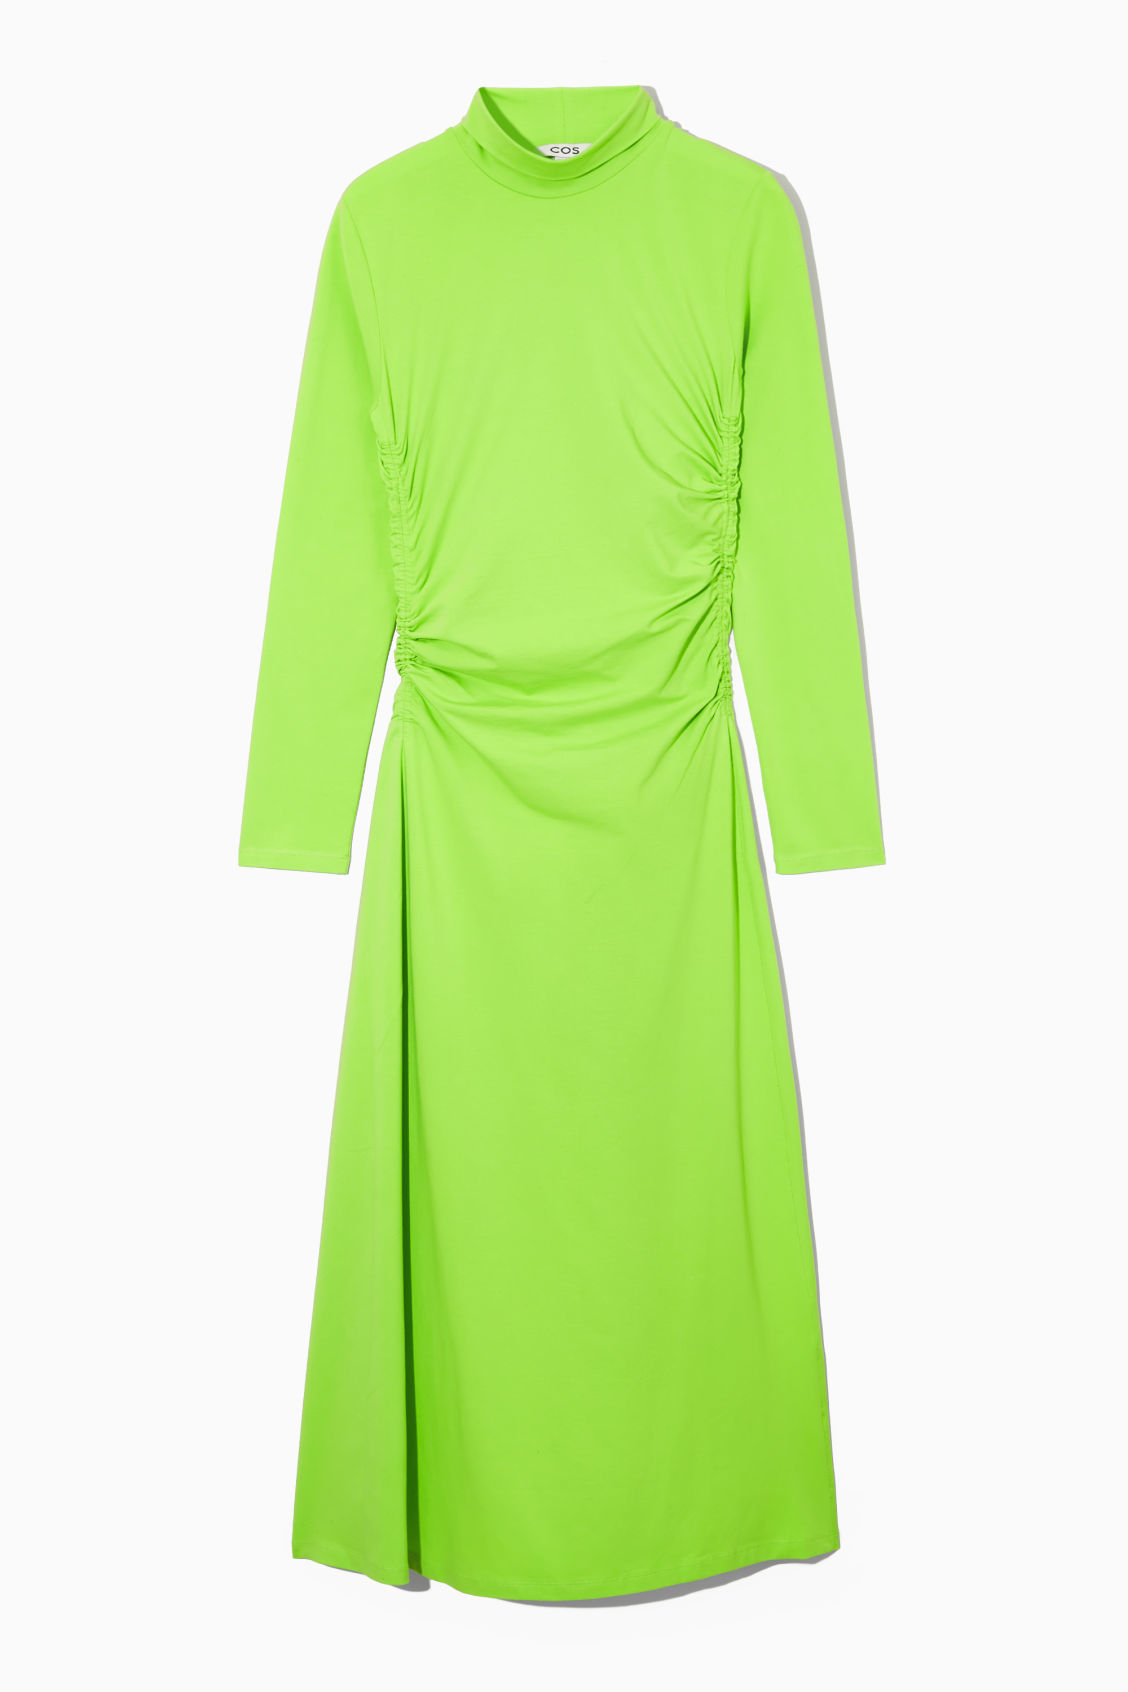 Vestido verde lima de manga larga y falda midi de COS (89 euros).